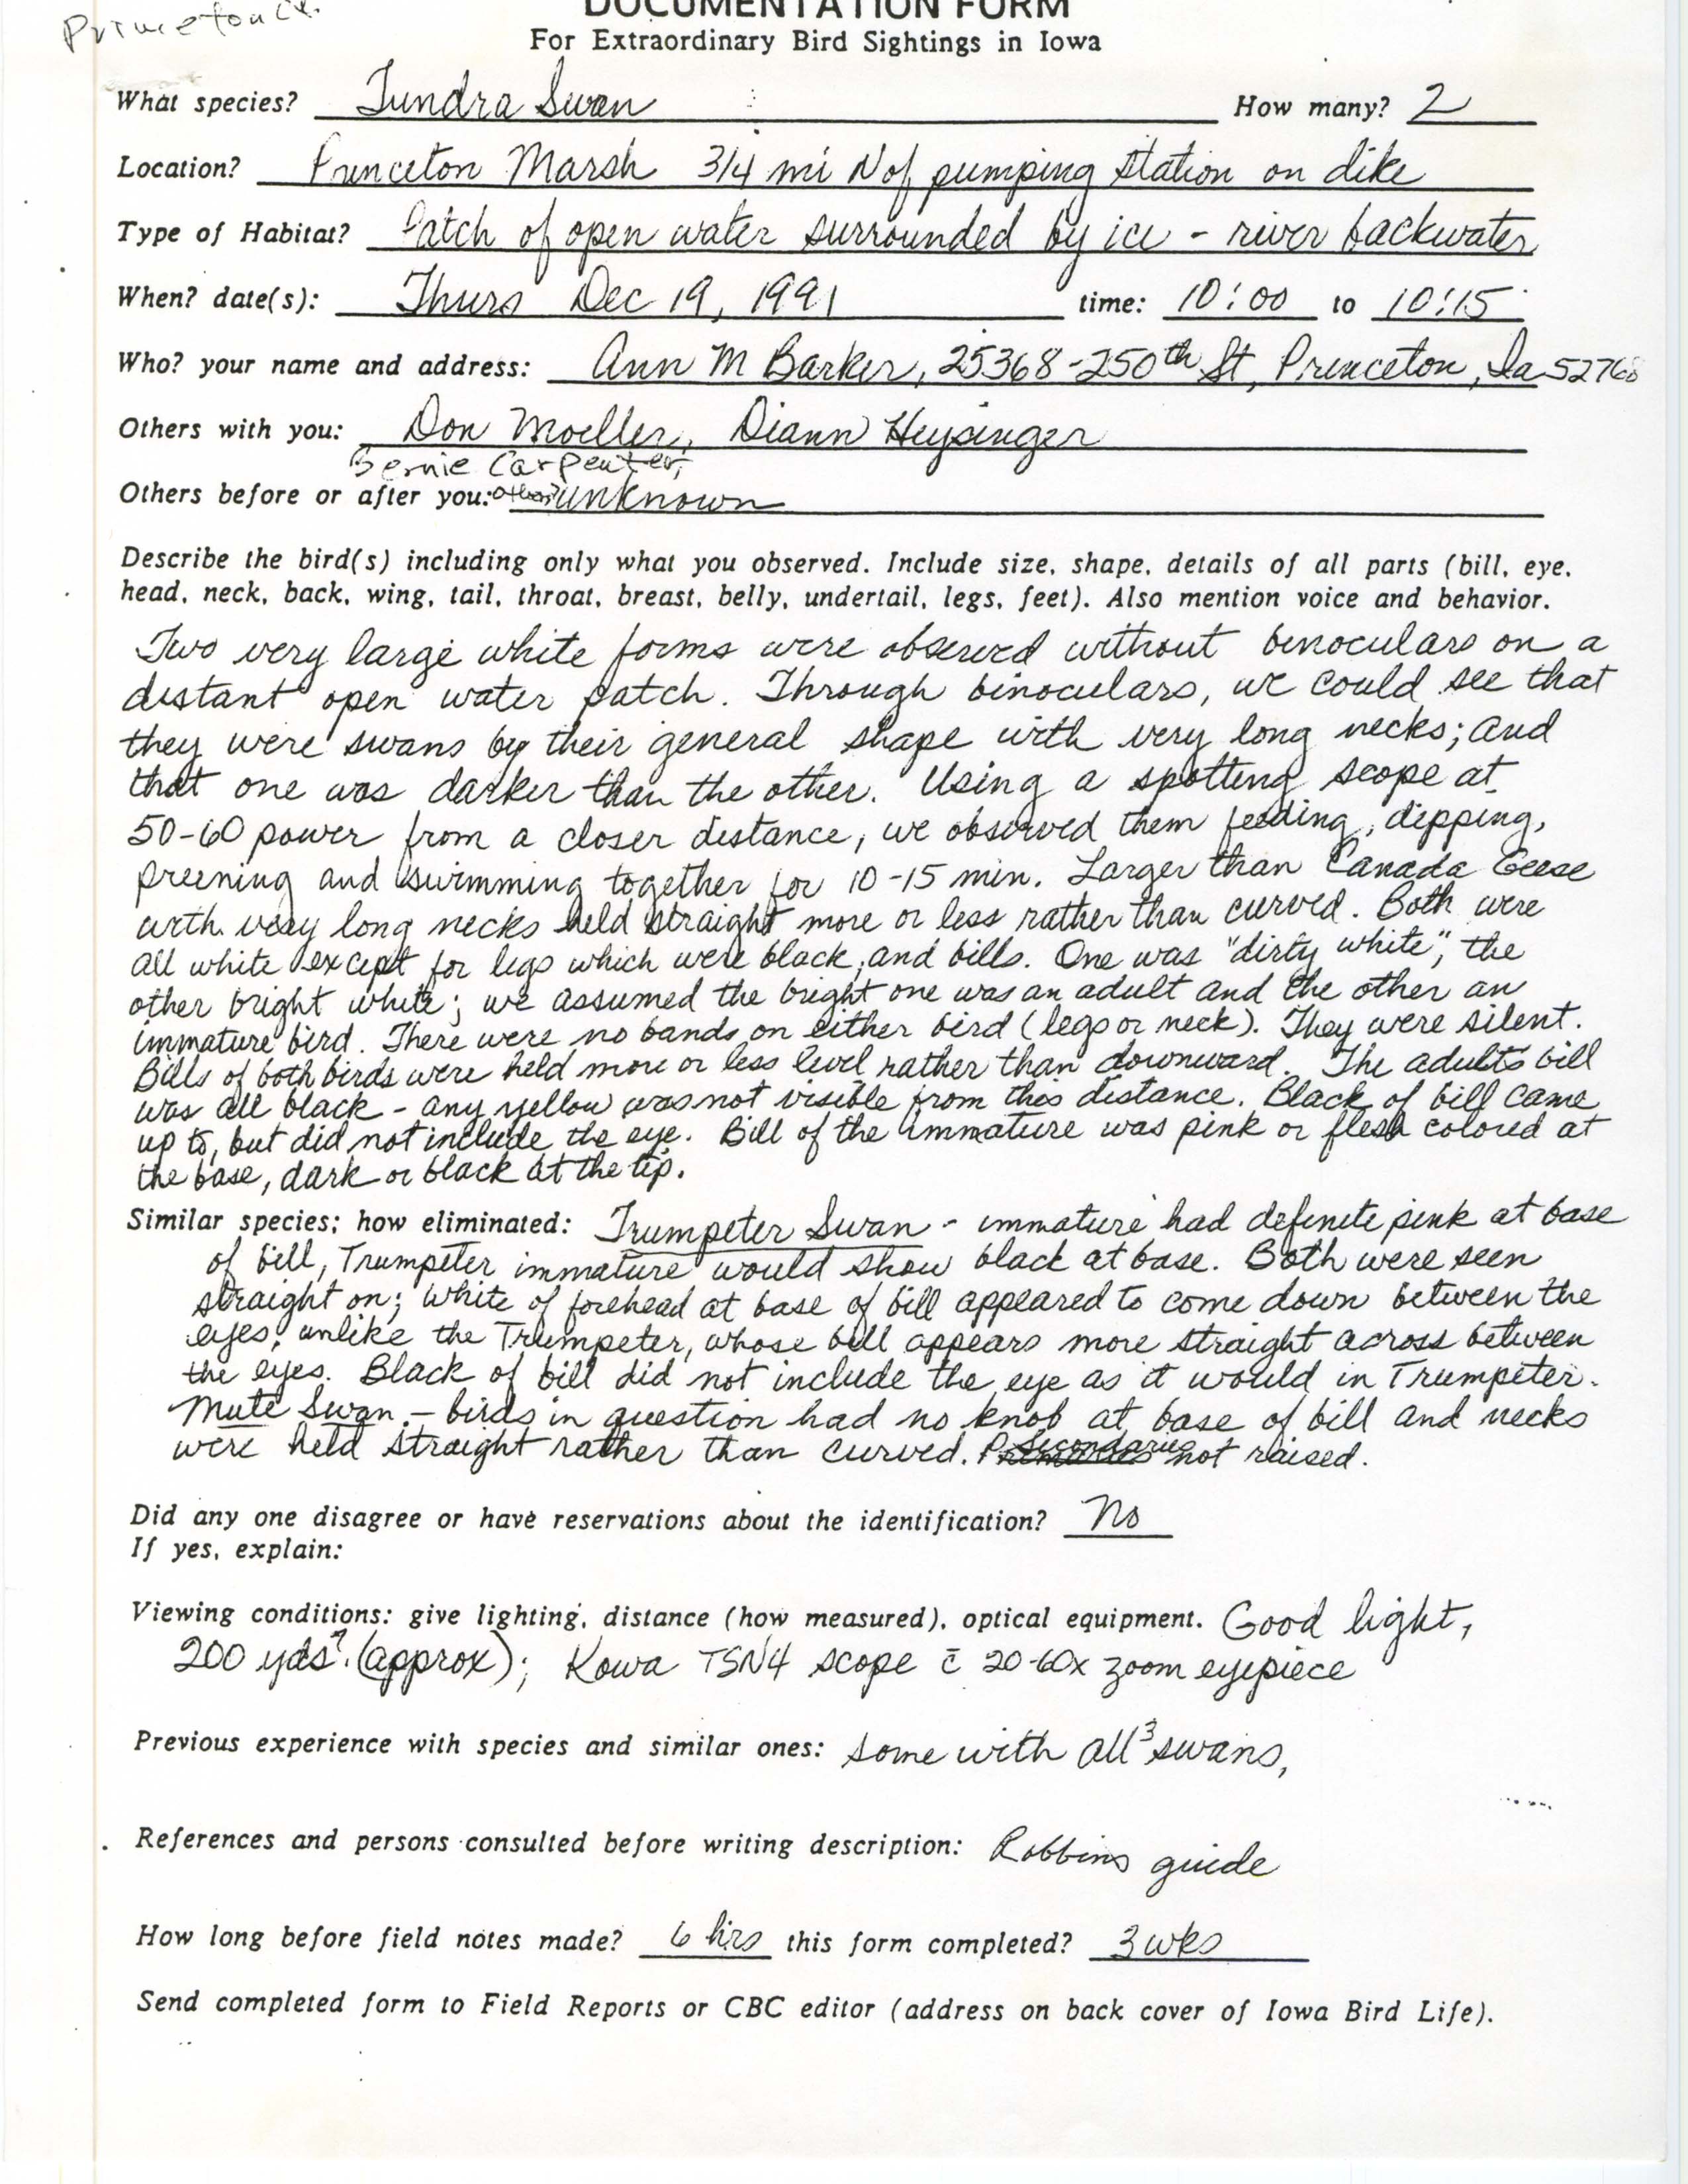 Rare bird documentation form for Tundra Swan at Princeton Marsh, 1991